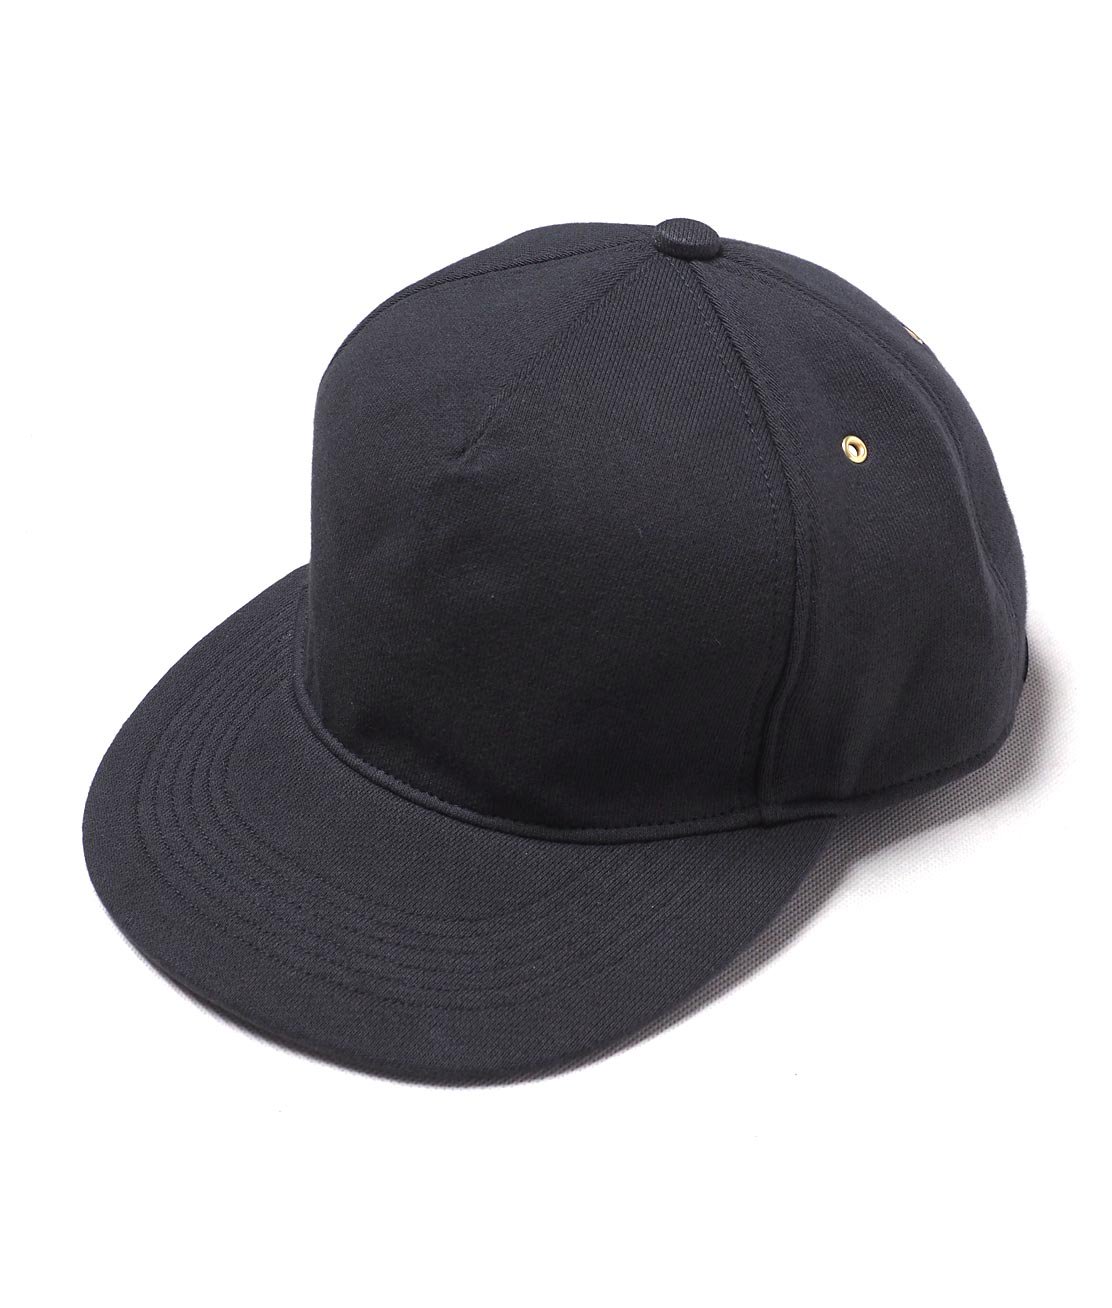 【TRAD MARKS】BASIC CAP SW - CHARCOAL GREY キャップ 帽子 スウェット 日本製 - HUNKY DORY